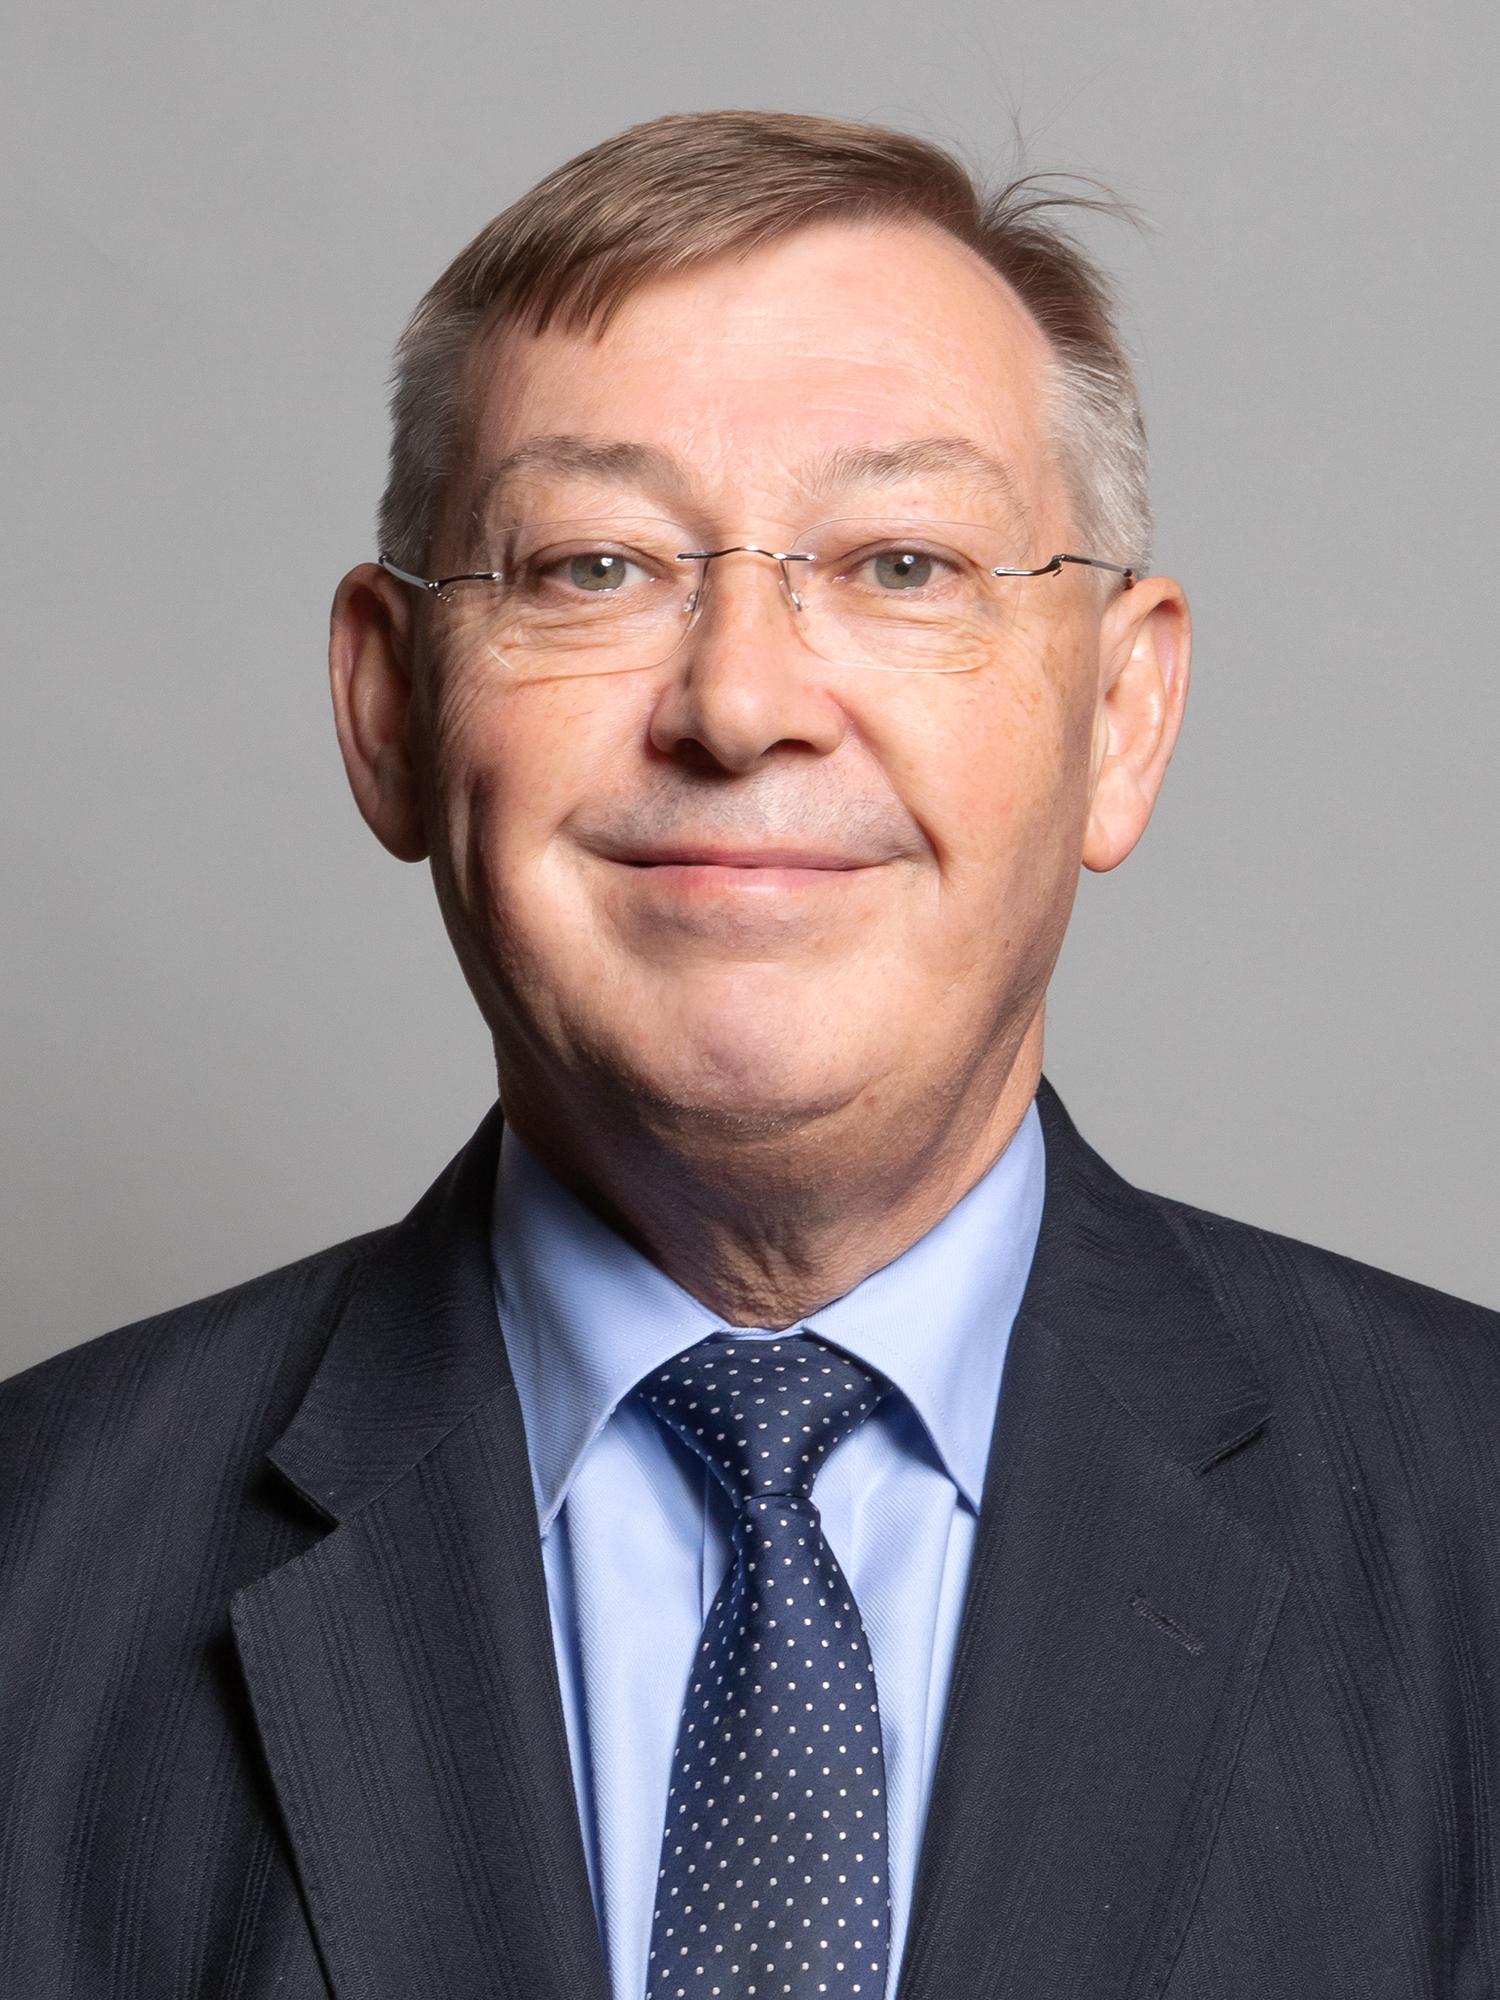 Ian Mearns MP